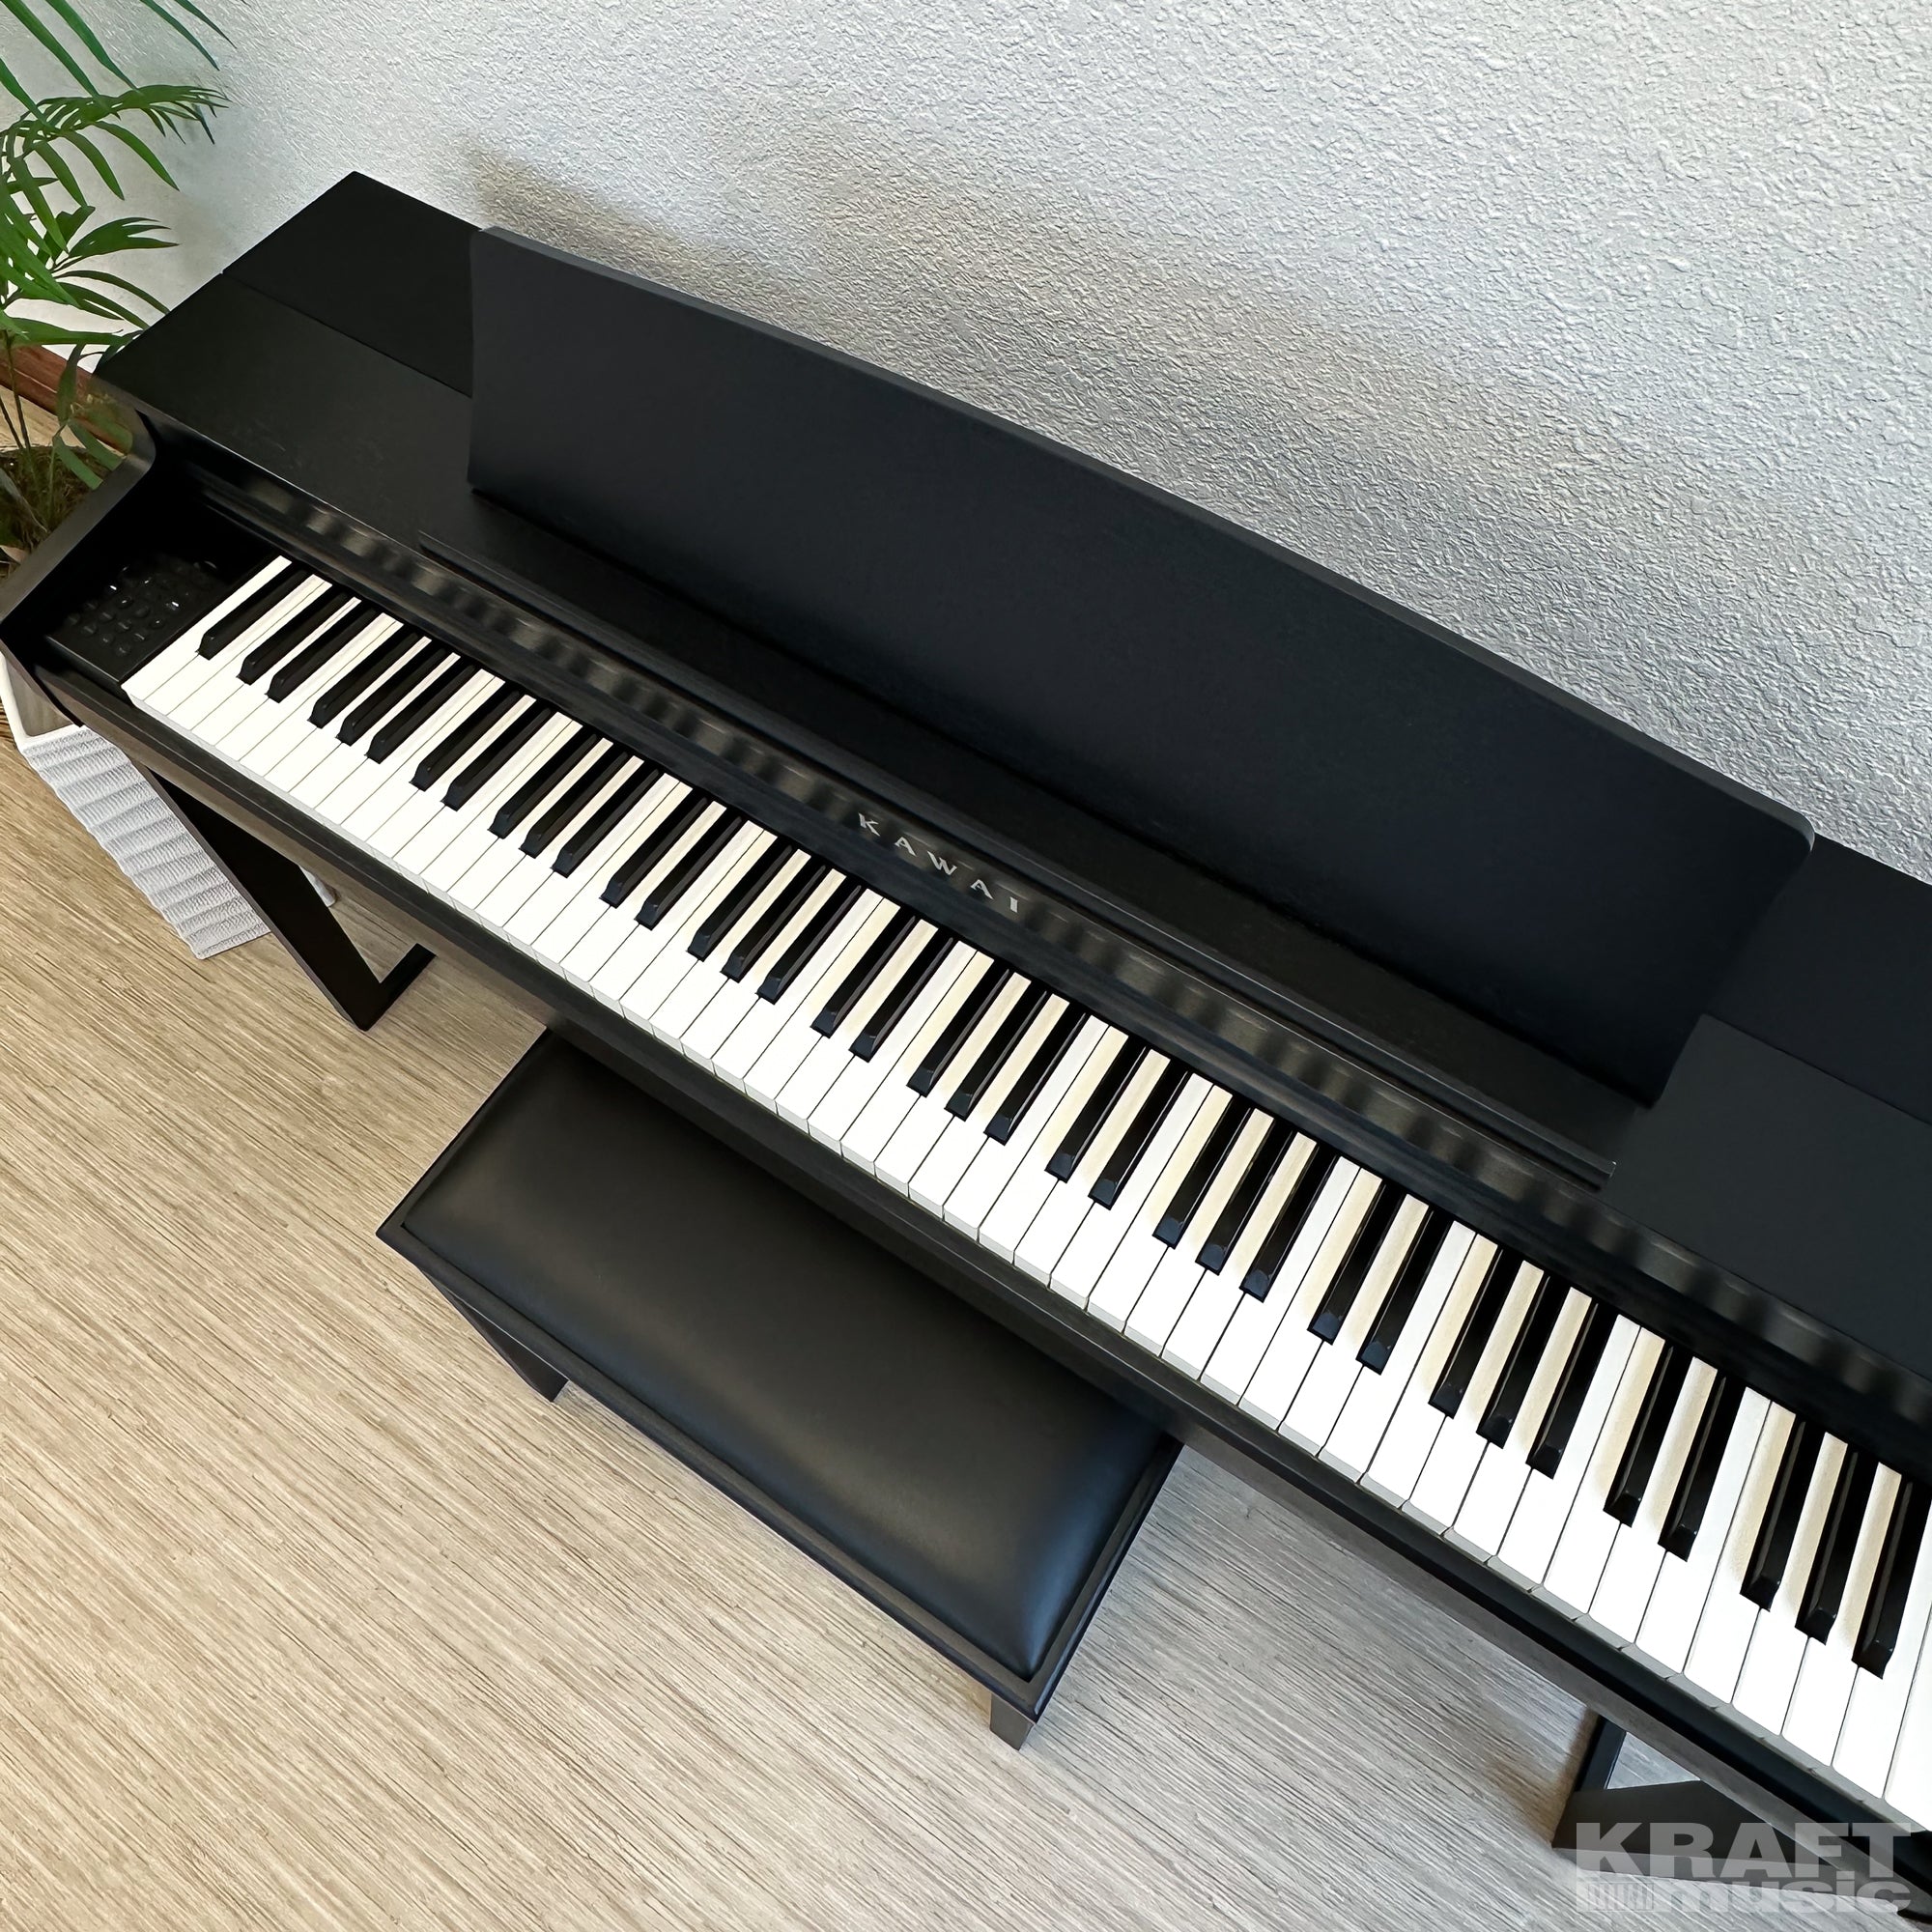 Kawai CN301 Digital Piano - Satin Black - Top view